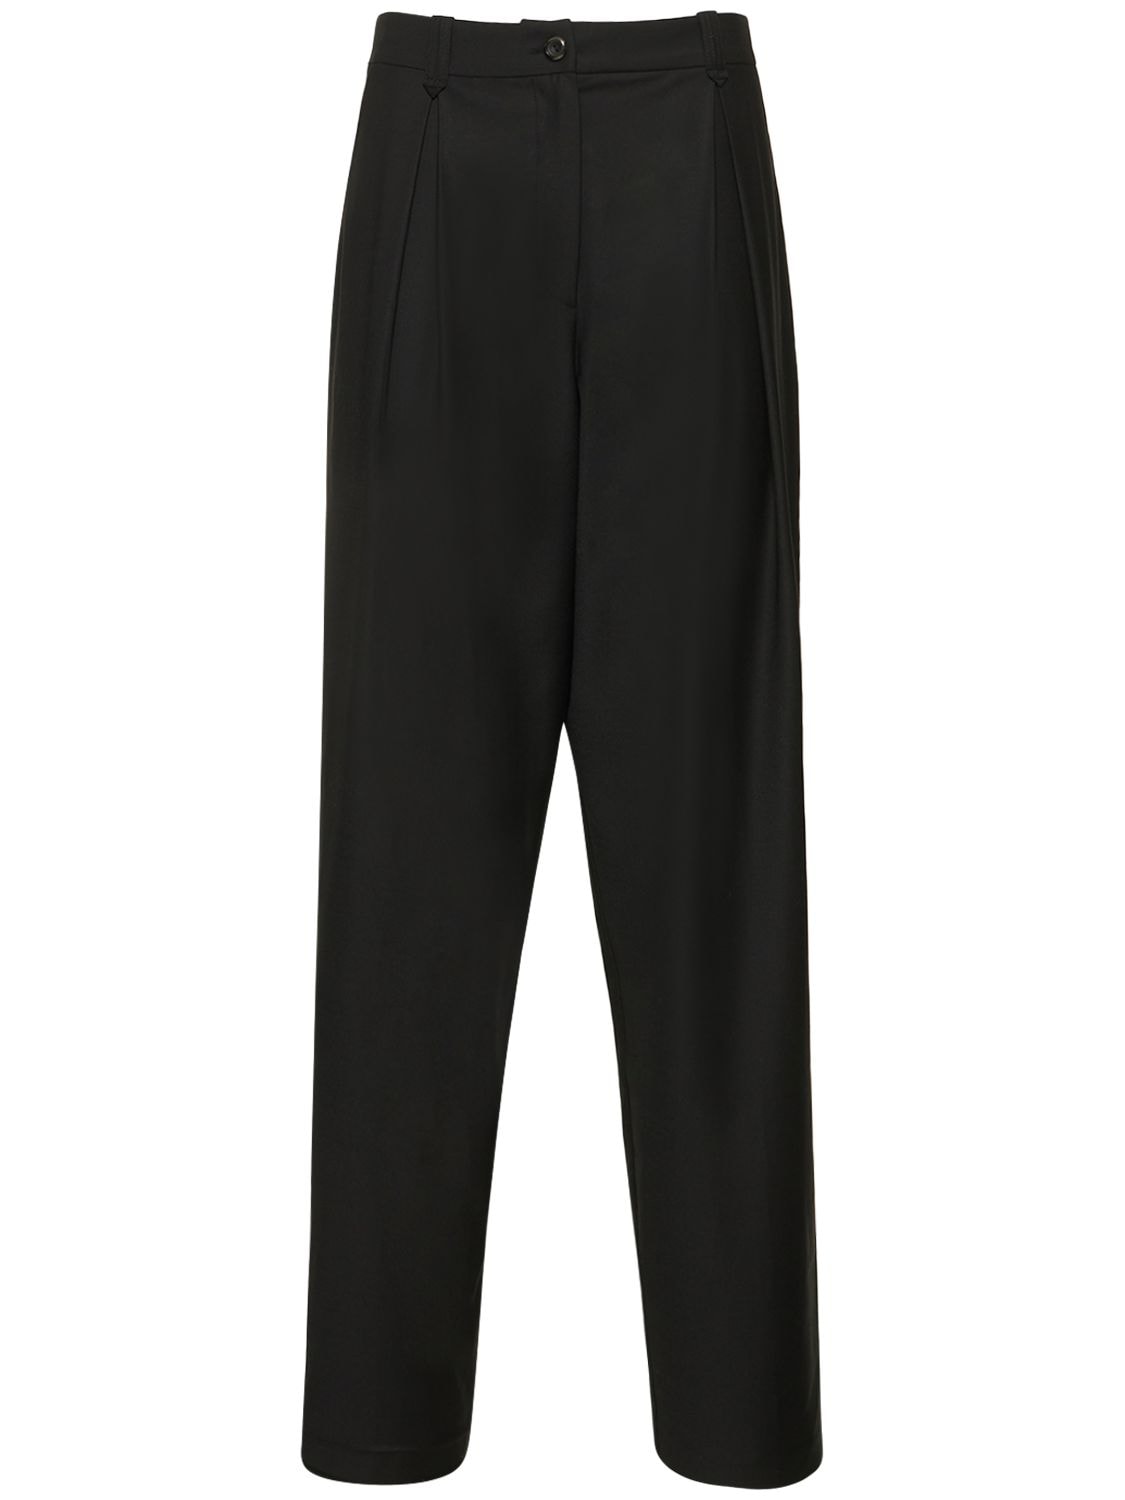 Frankremme Greta Stretch Wool Pleated Pants In Black